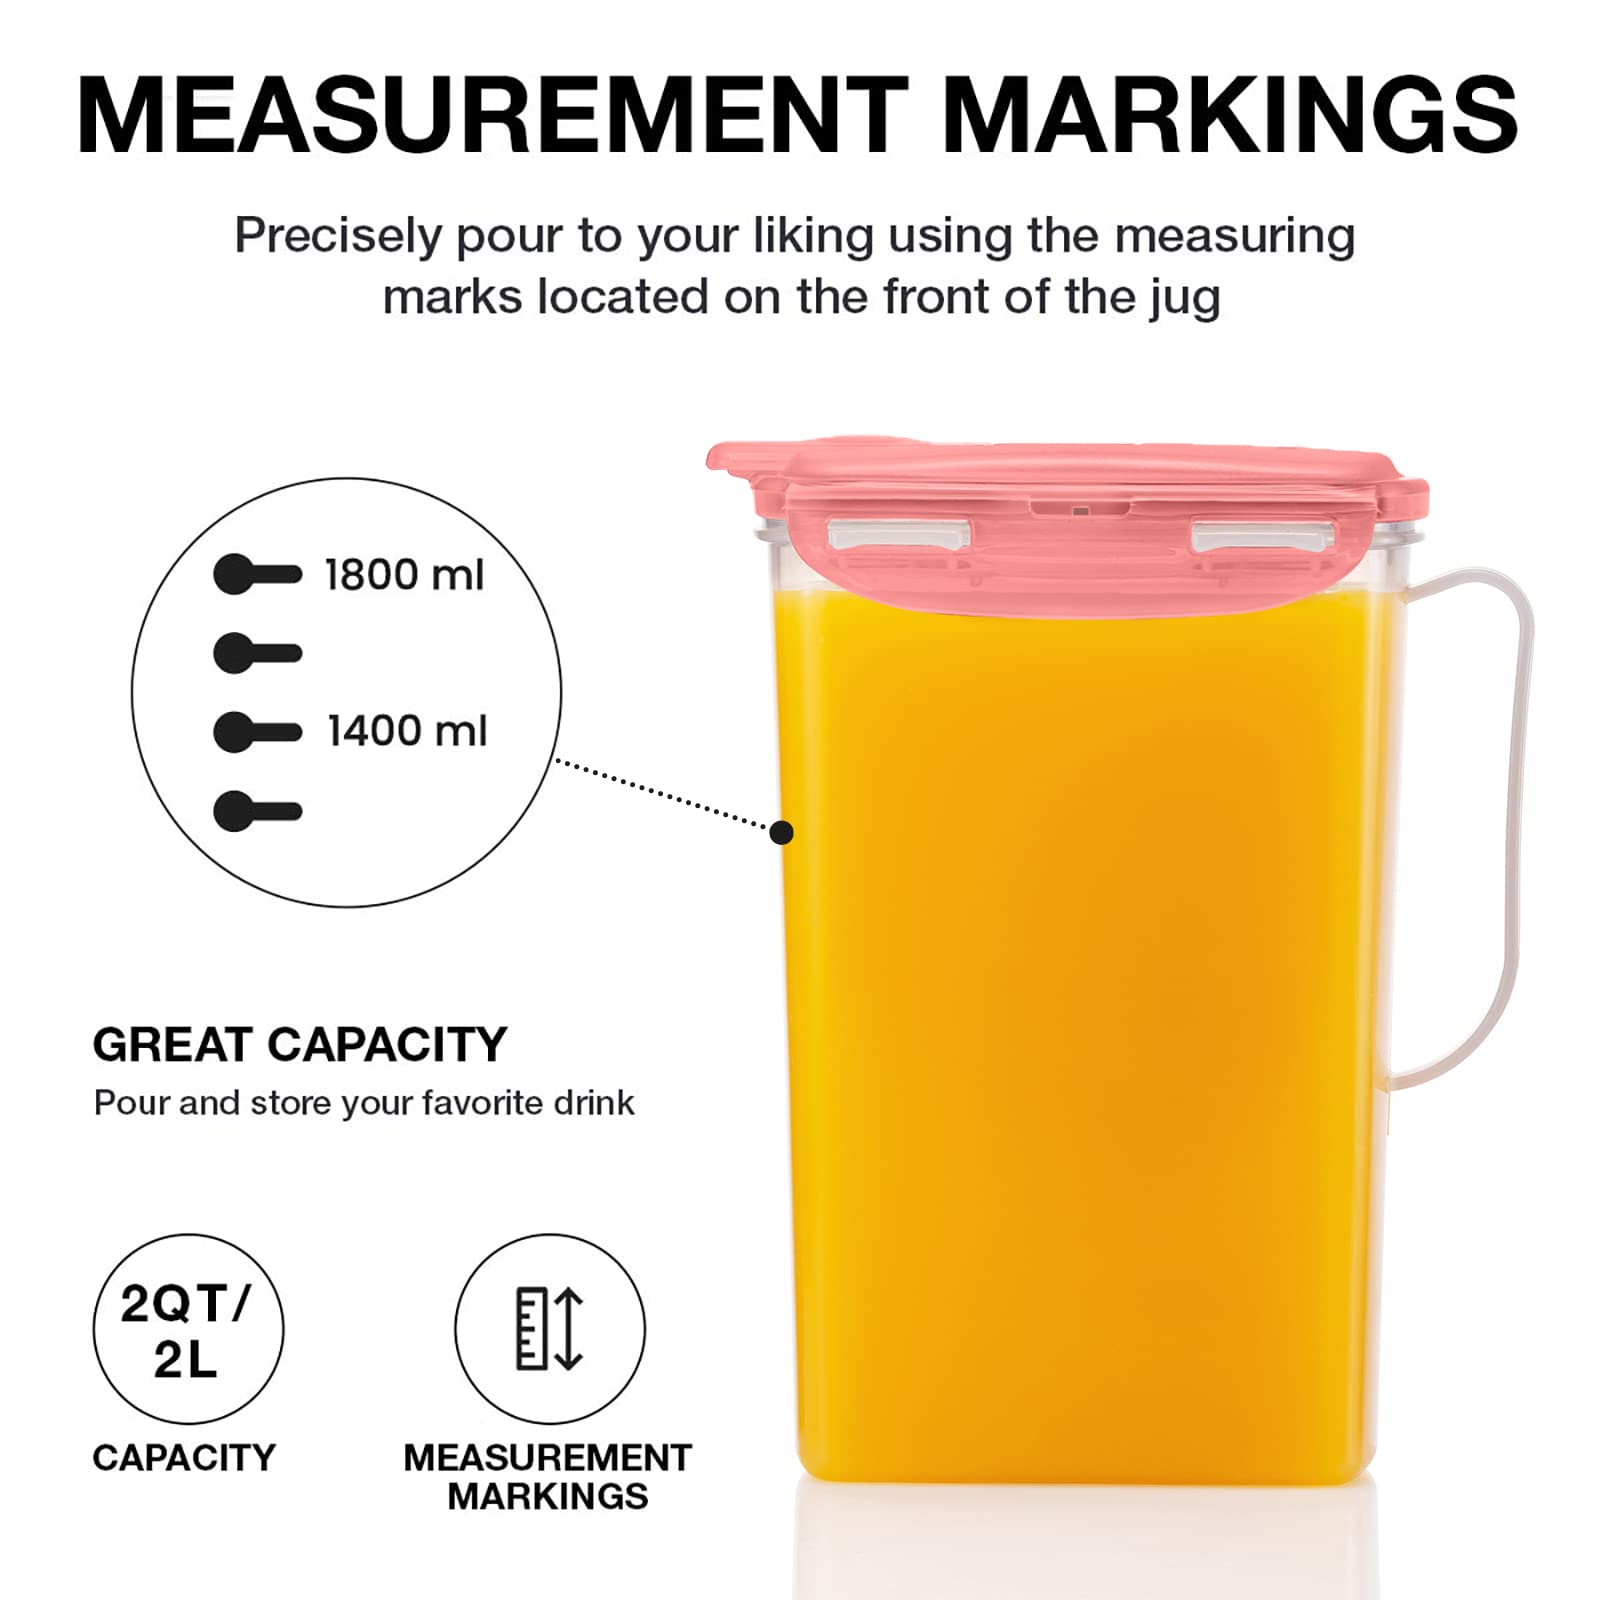 LocknLock Aqua Fridge Door Water Jug with Handle BPA Free Plastic Pitcher with Flip Top Lid Perfect for Making Teas and Juices, 2 Quarts, Pink